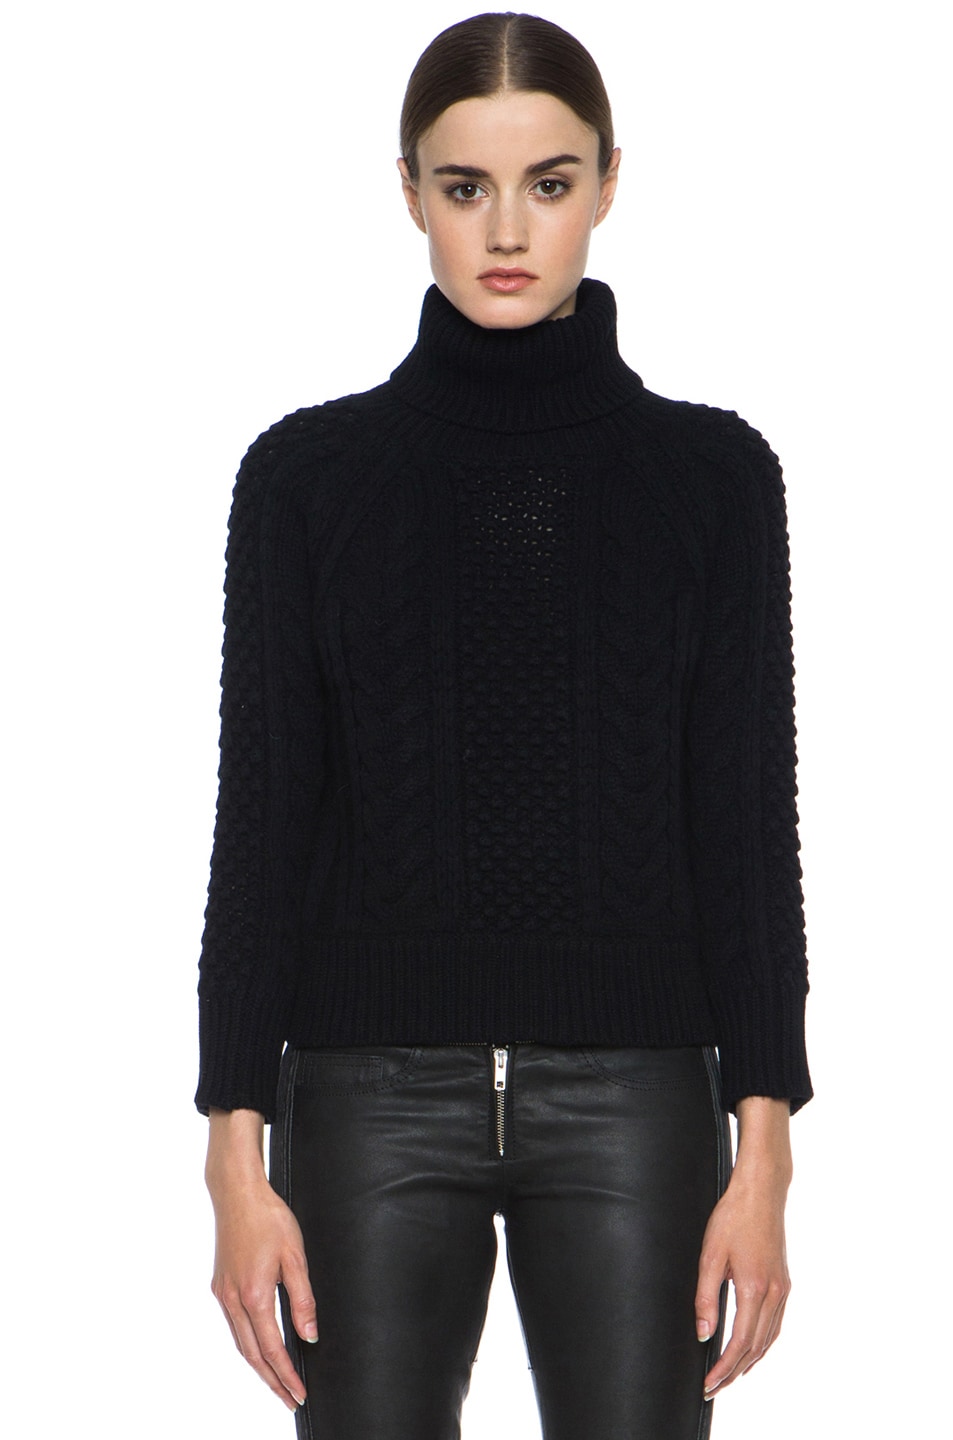 Altuzarra Waverly Cashmere Sweater in Black | FWRD